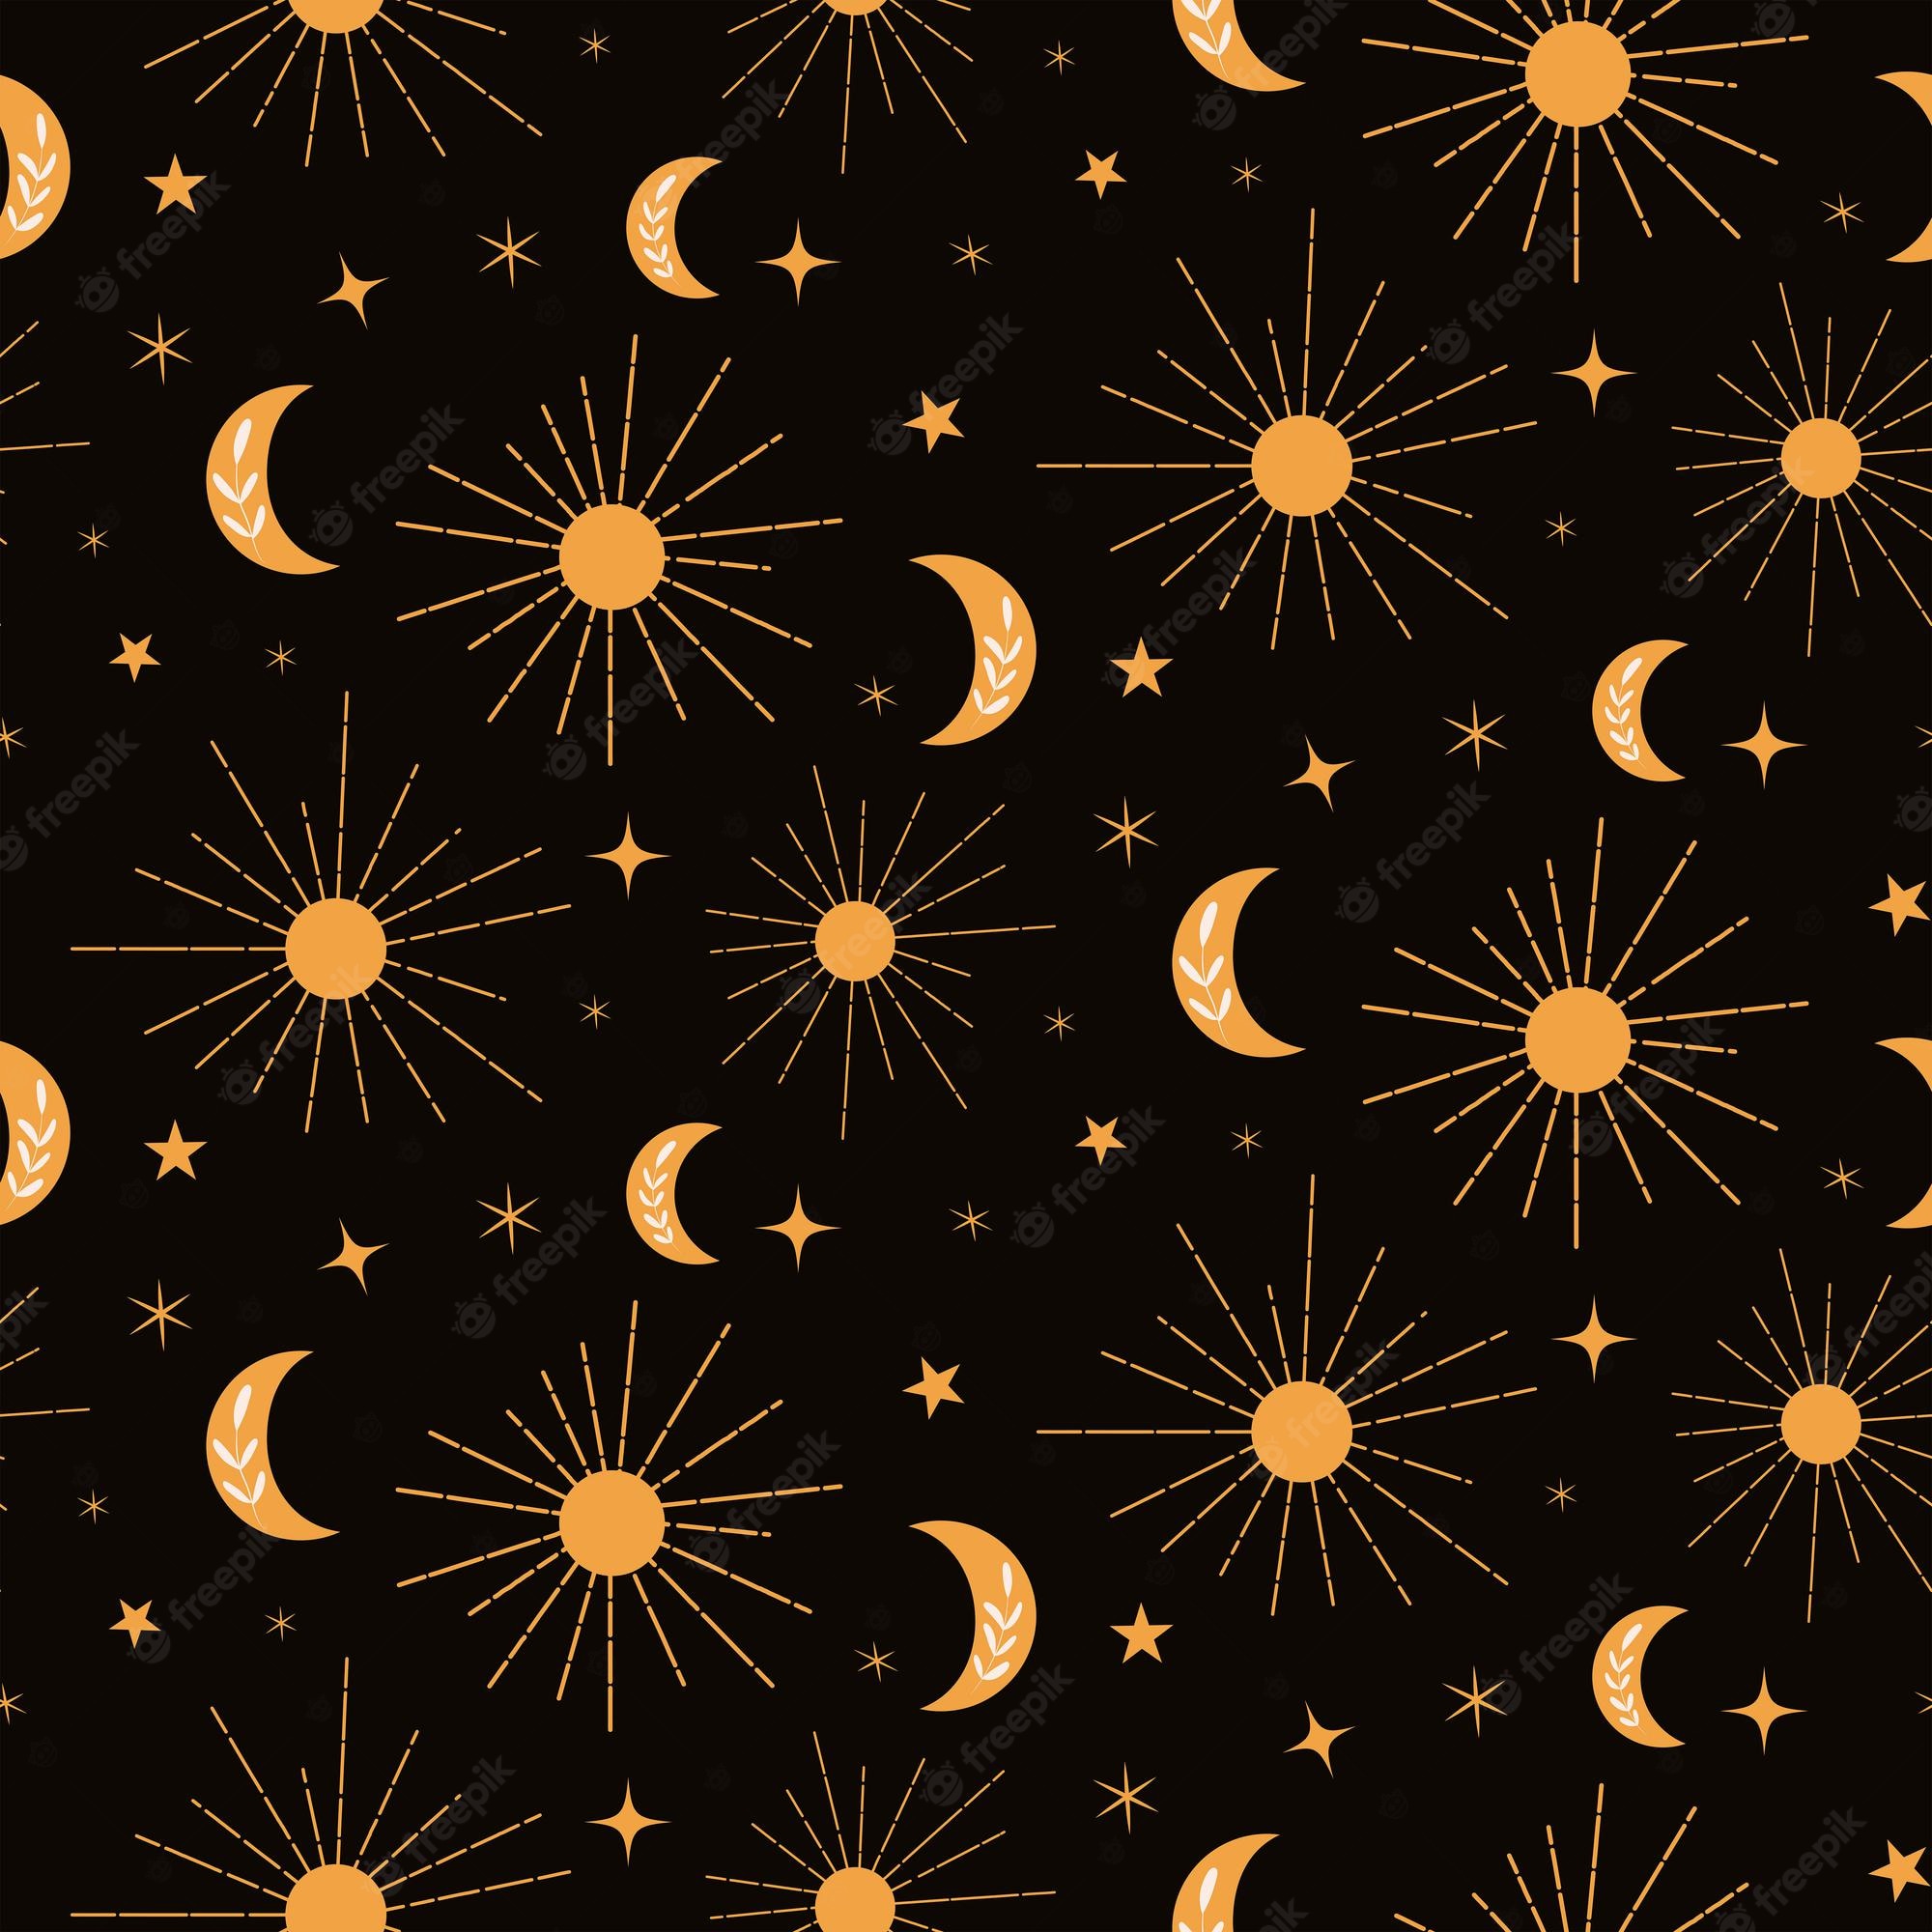 Boho Sun And Moon Wallpapers